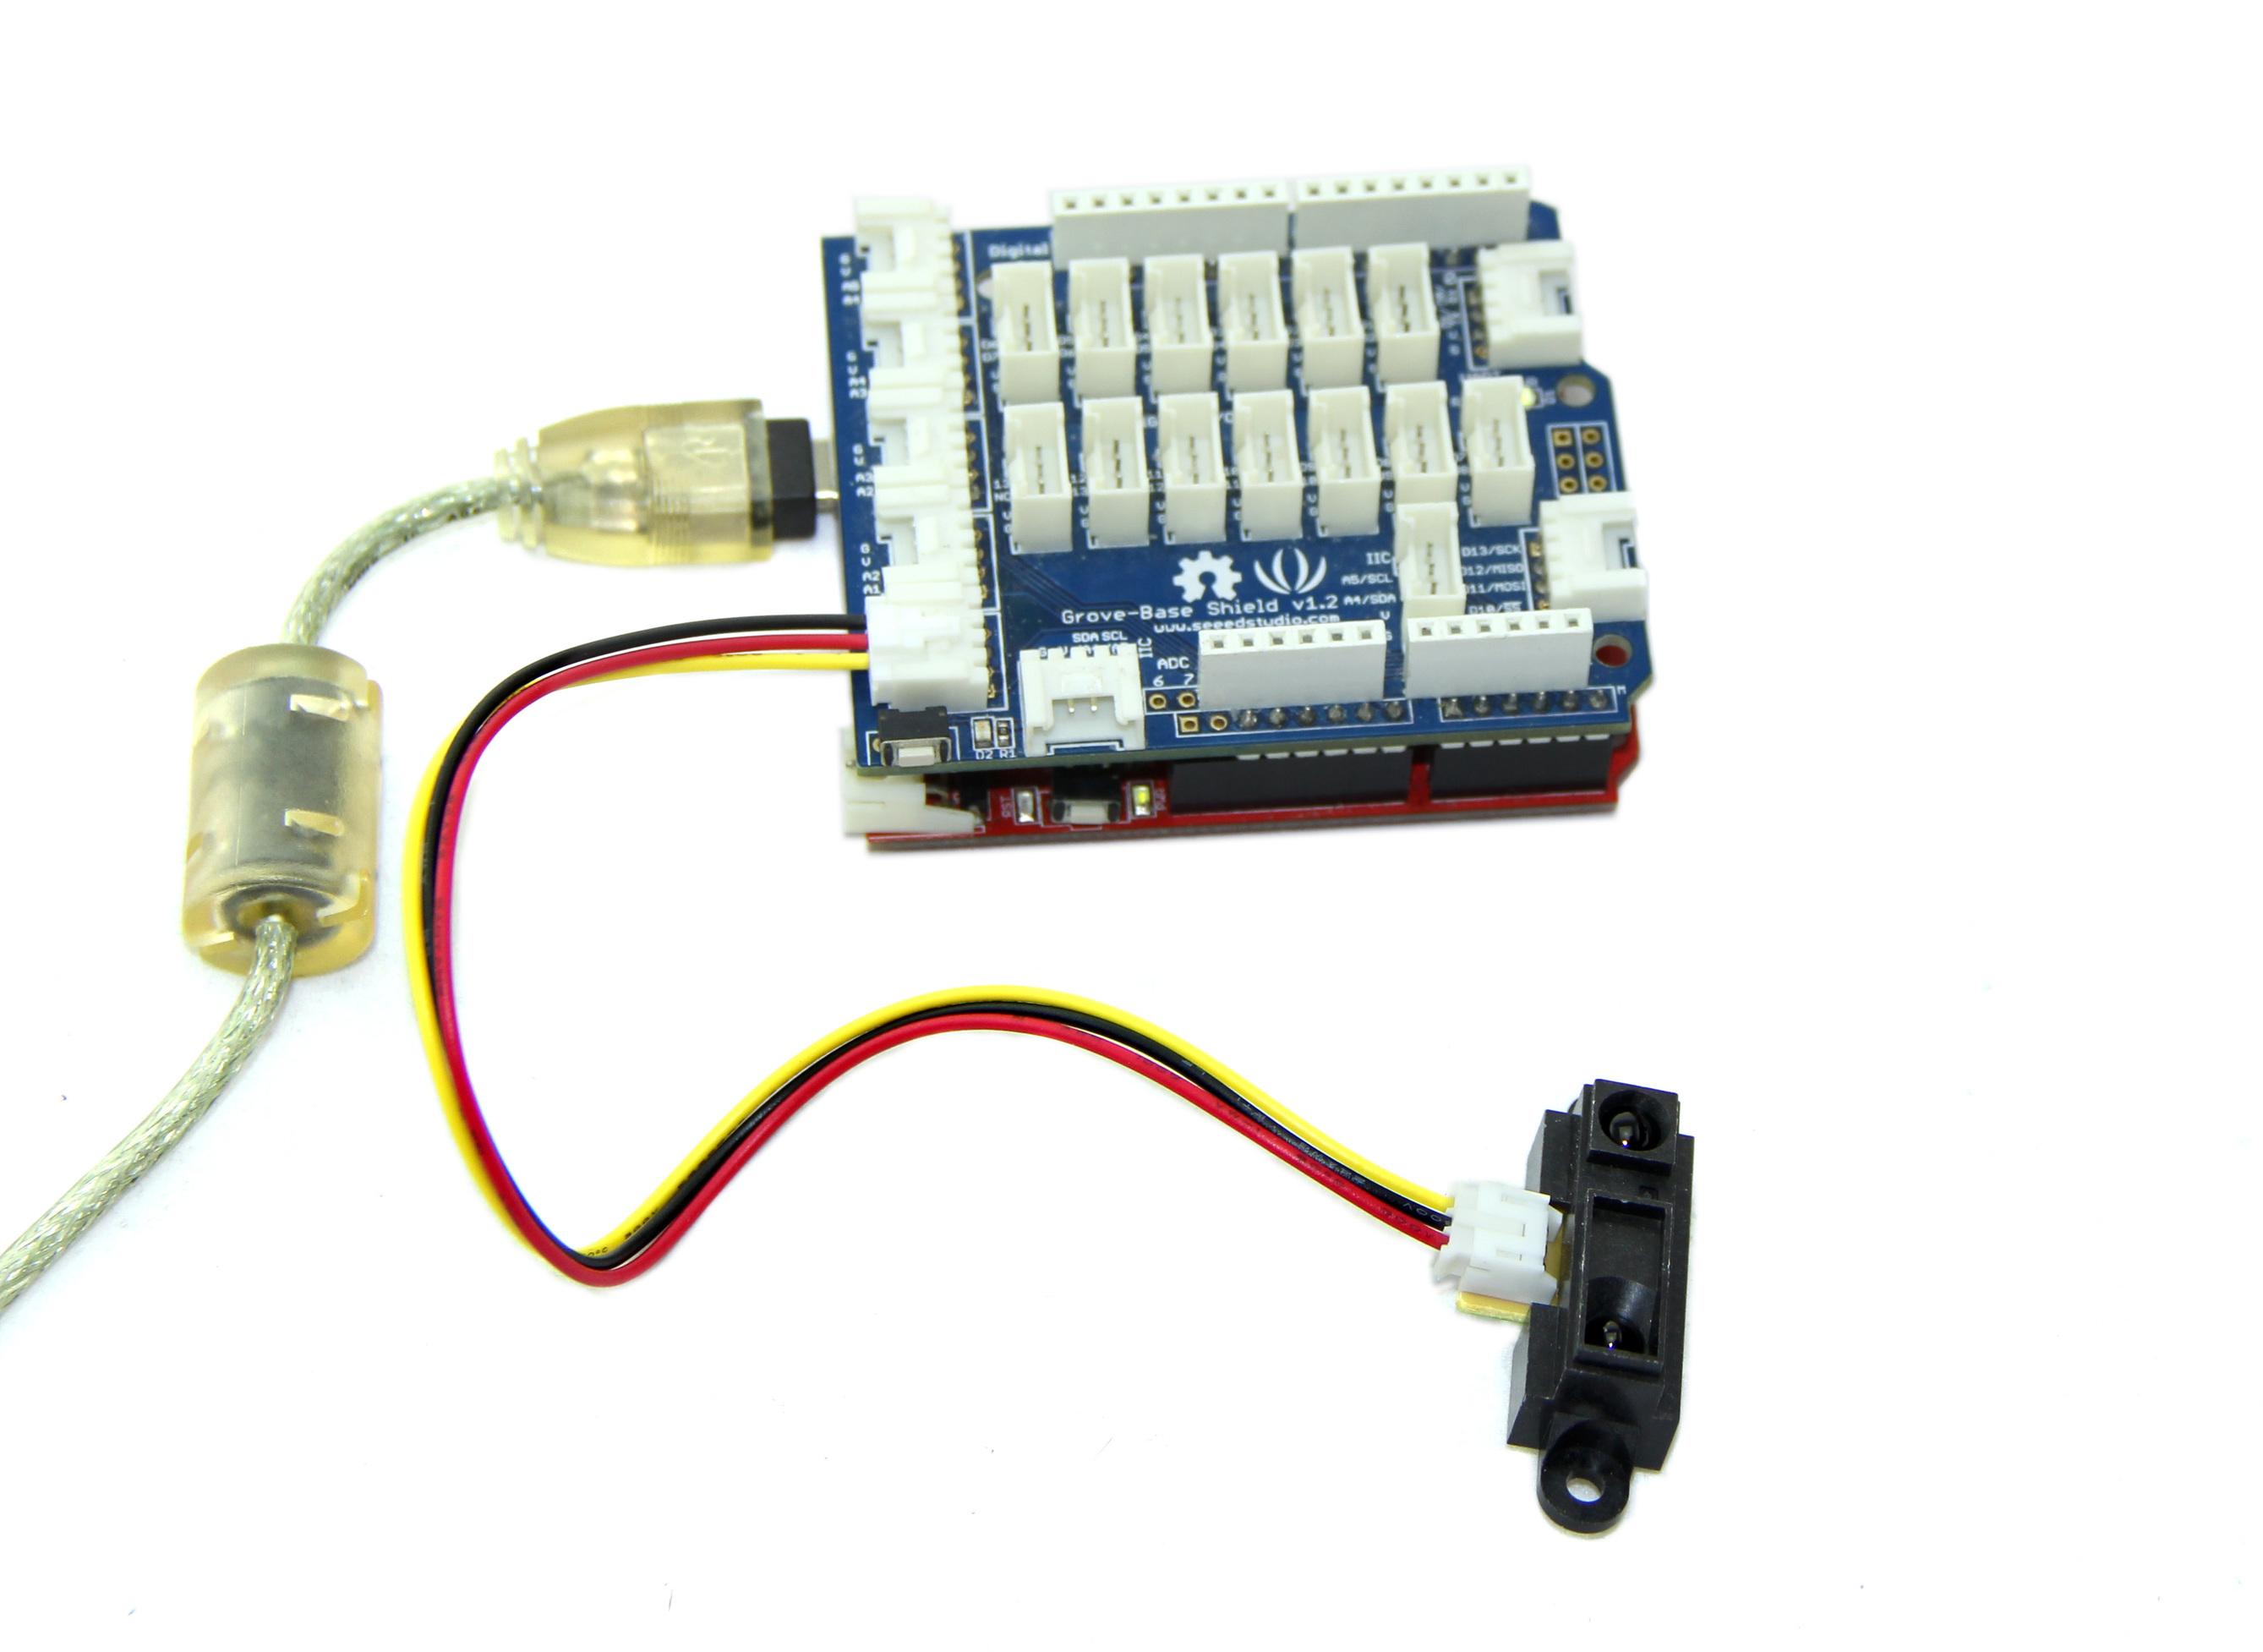 Buy IR Proximity Sensor for Arduino at